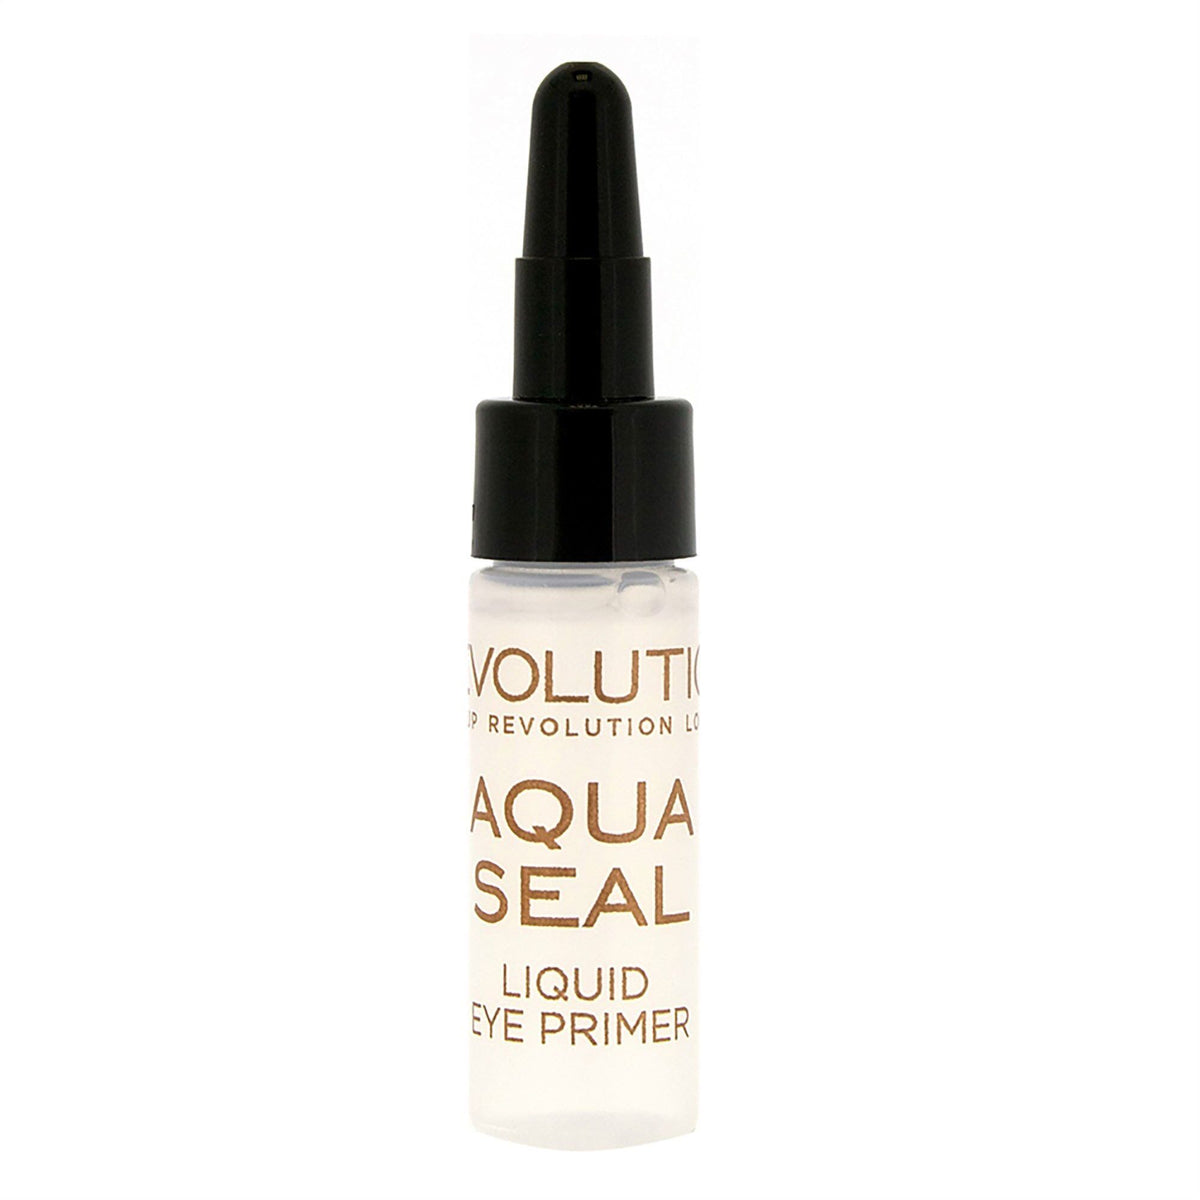 Revolution Aqua Seal Liquid Eye Primer